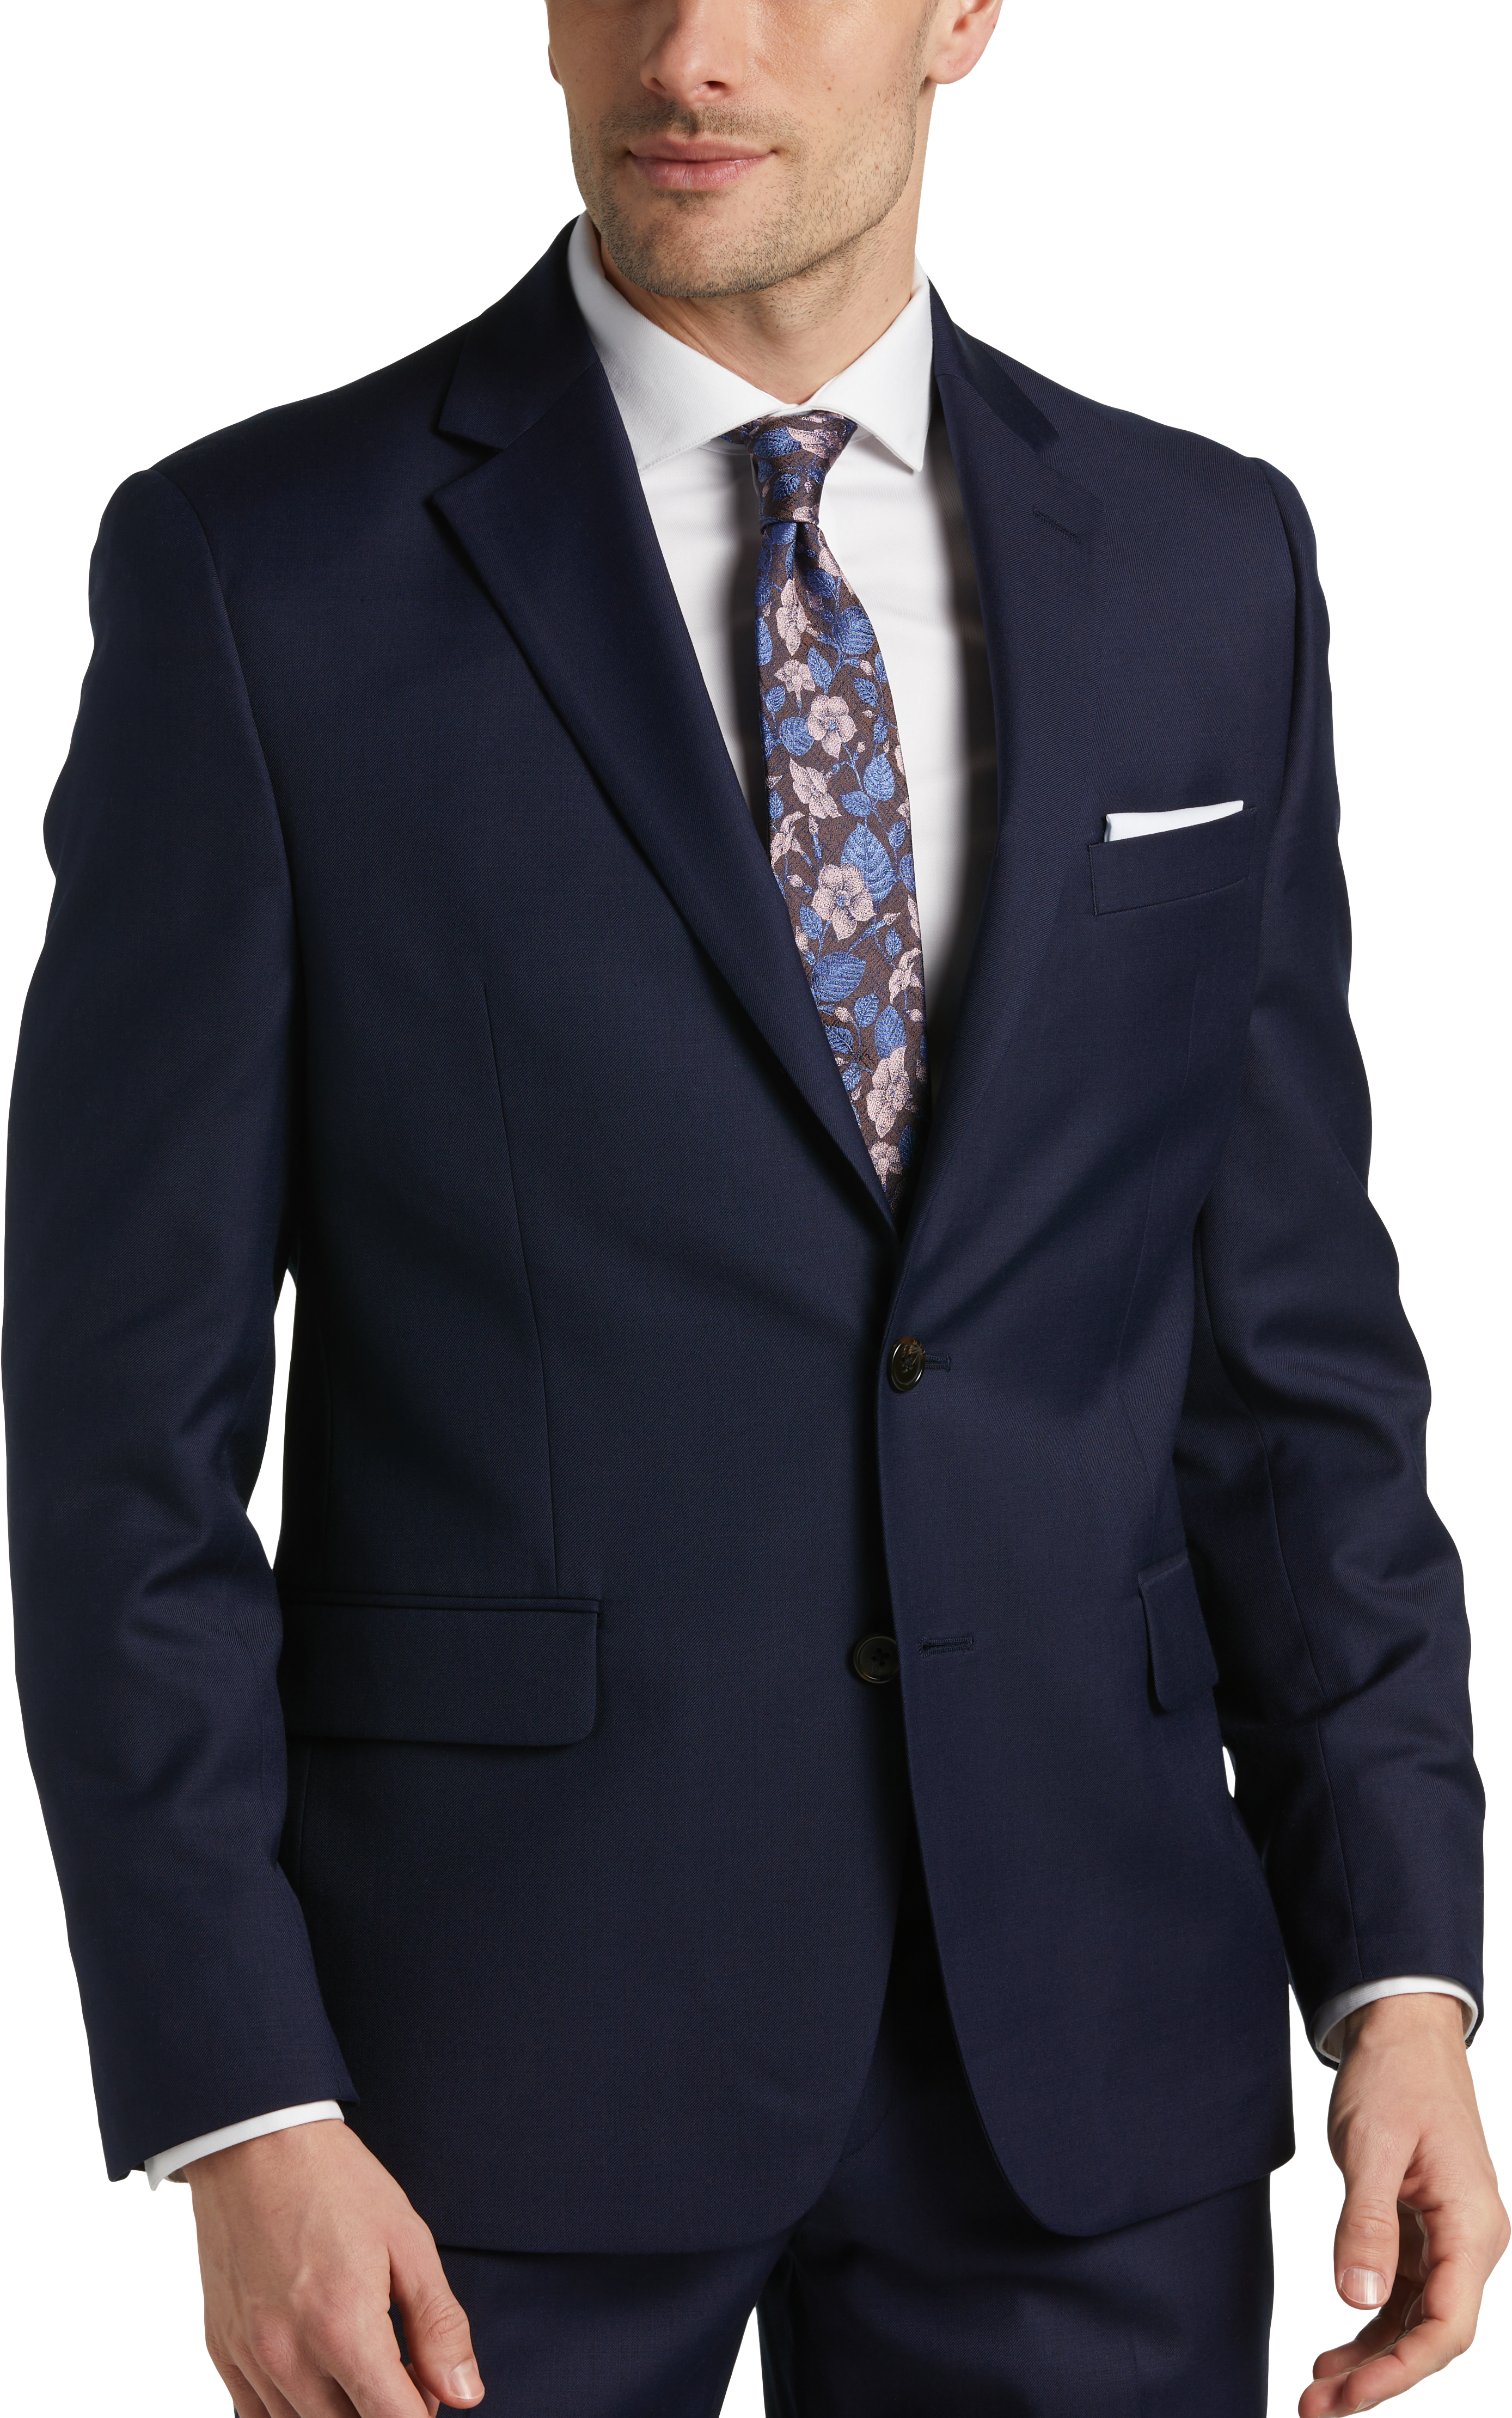 Classic Fit Notch Collar Suit Separates Jacket